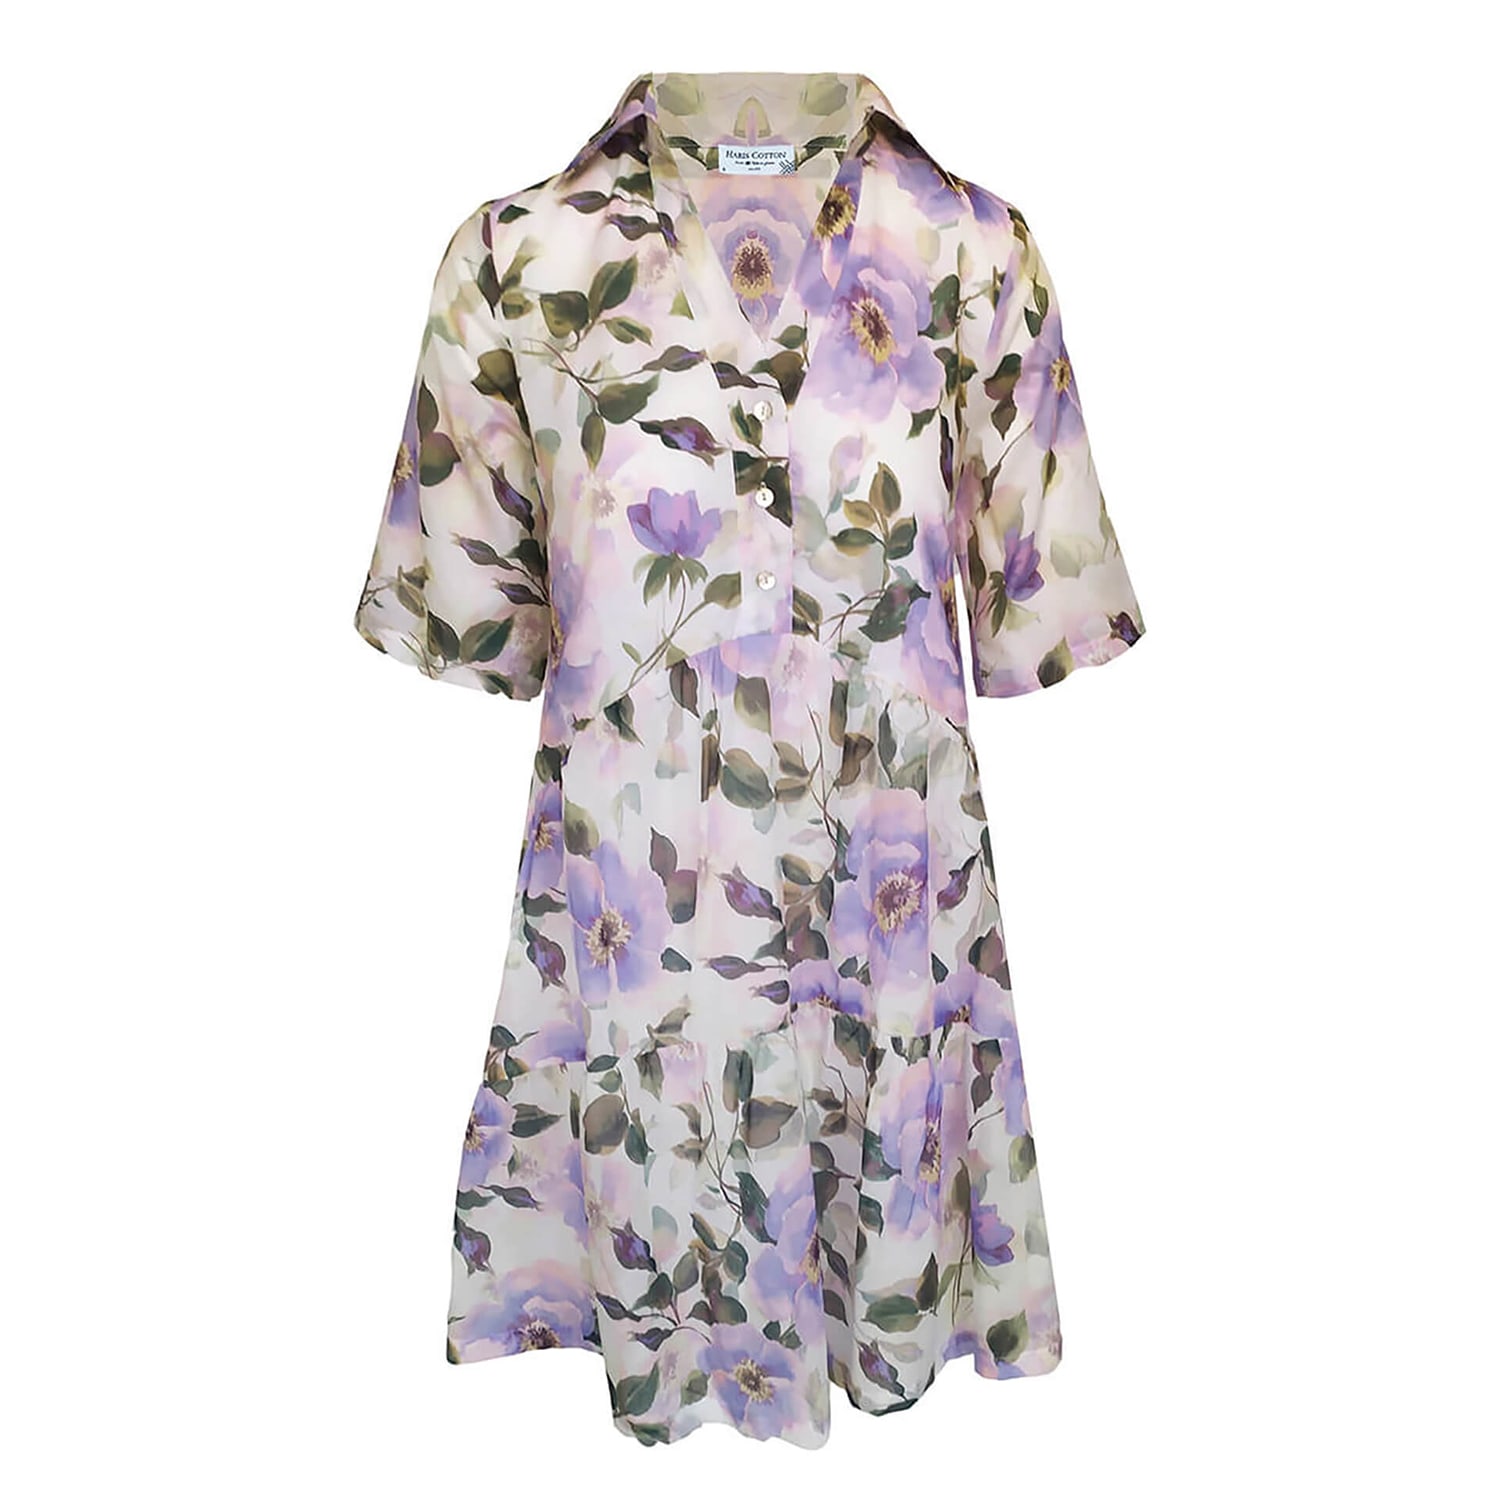 Haris Cotton Women's Printed Voile Cotton Short Shirt Dress - Purple Roses In Multi